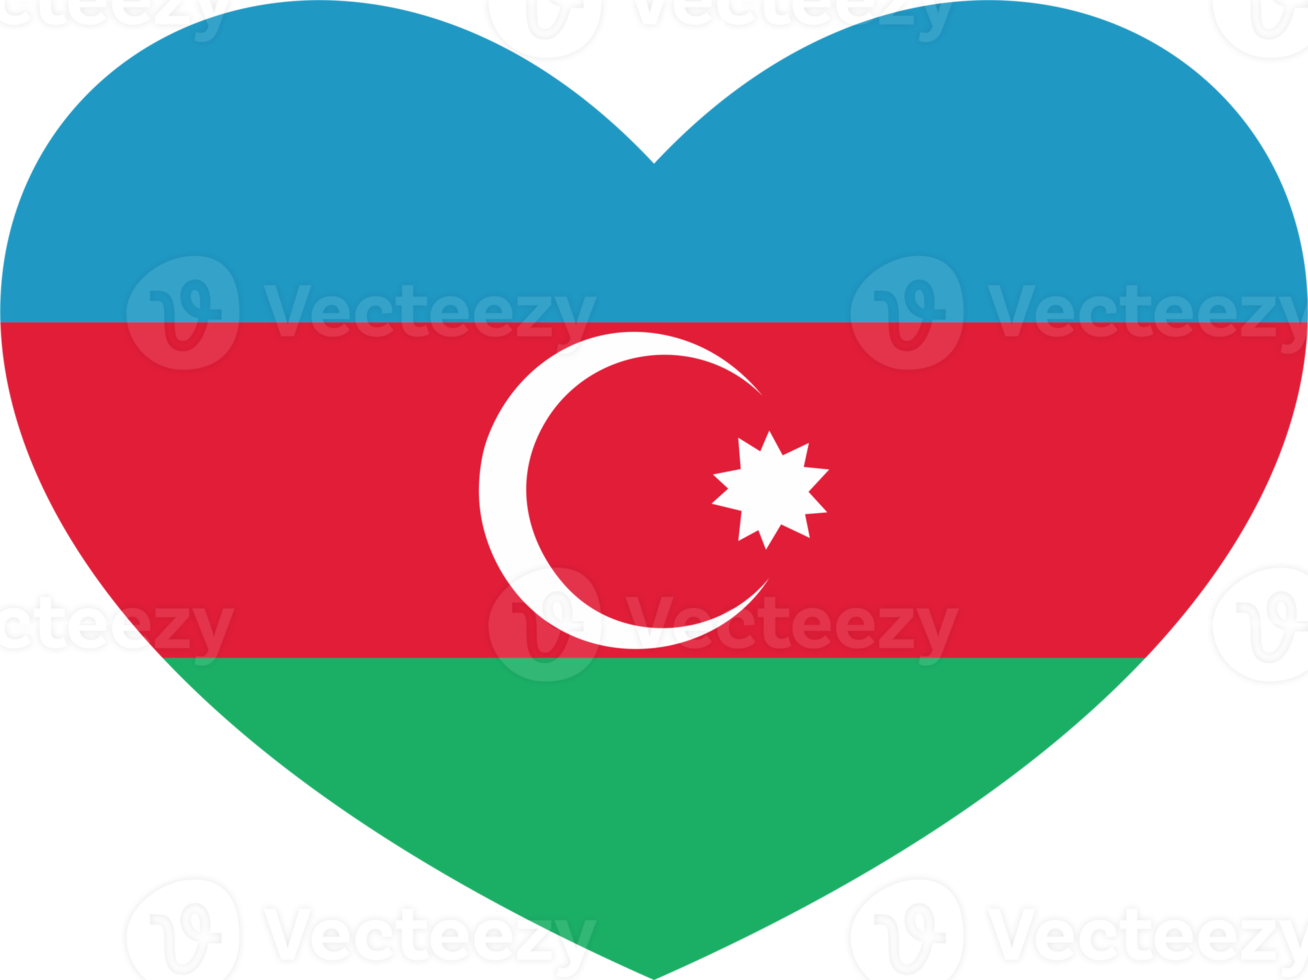 Aserbaidschan Flagge Herz gestalten png